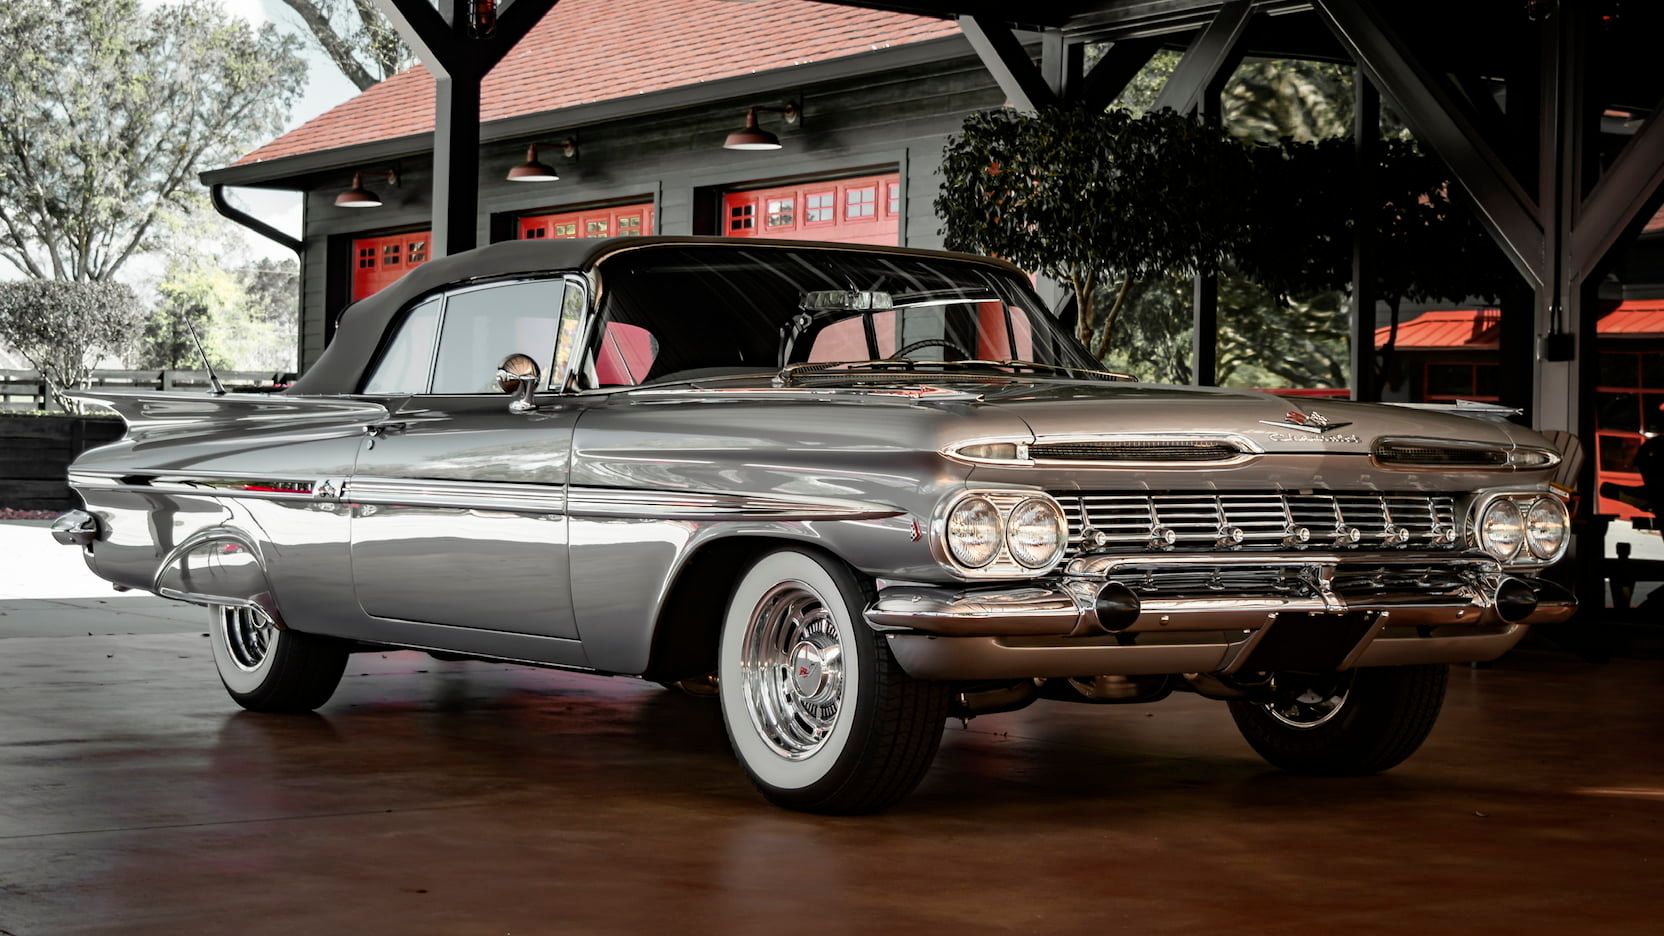 1959 Impala Covnertible Auction Front Quarter View